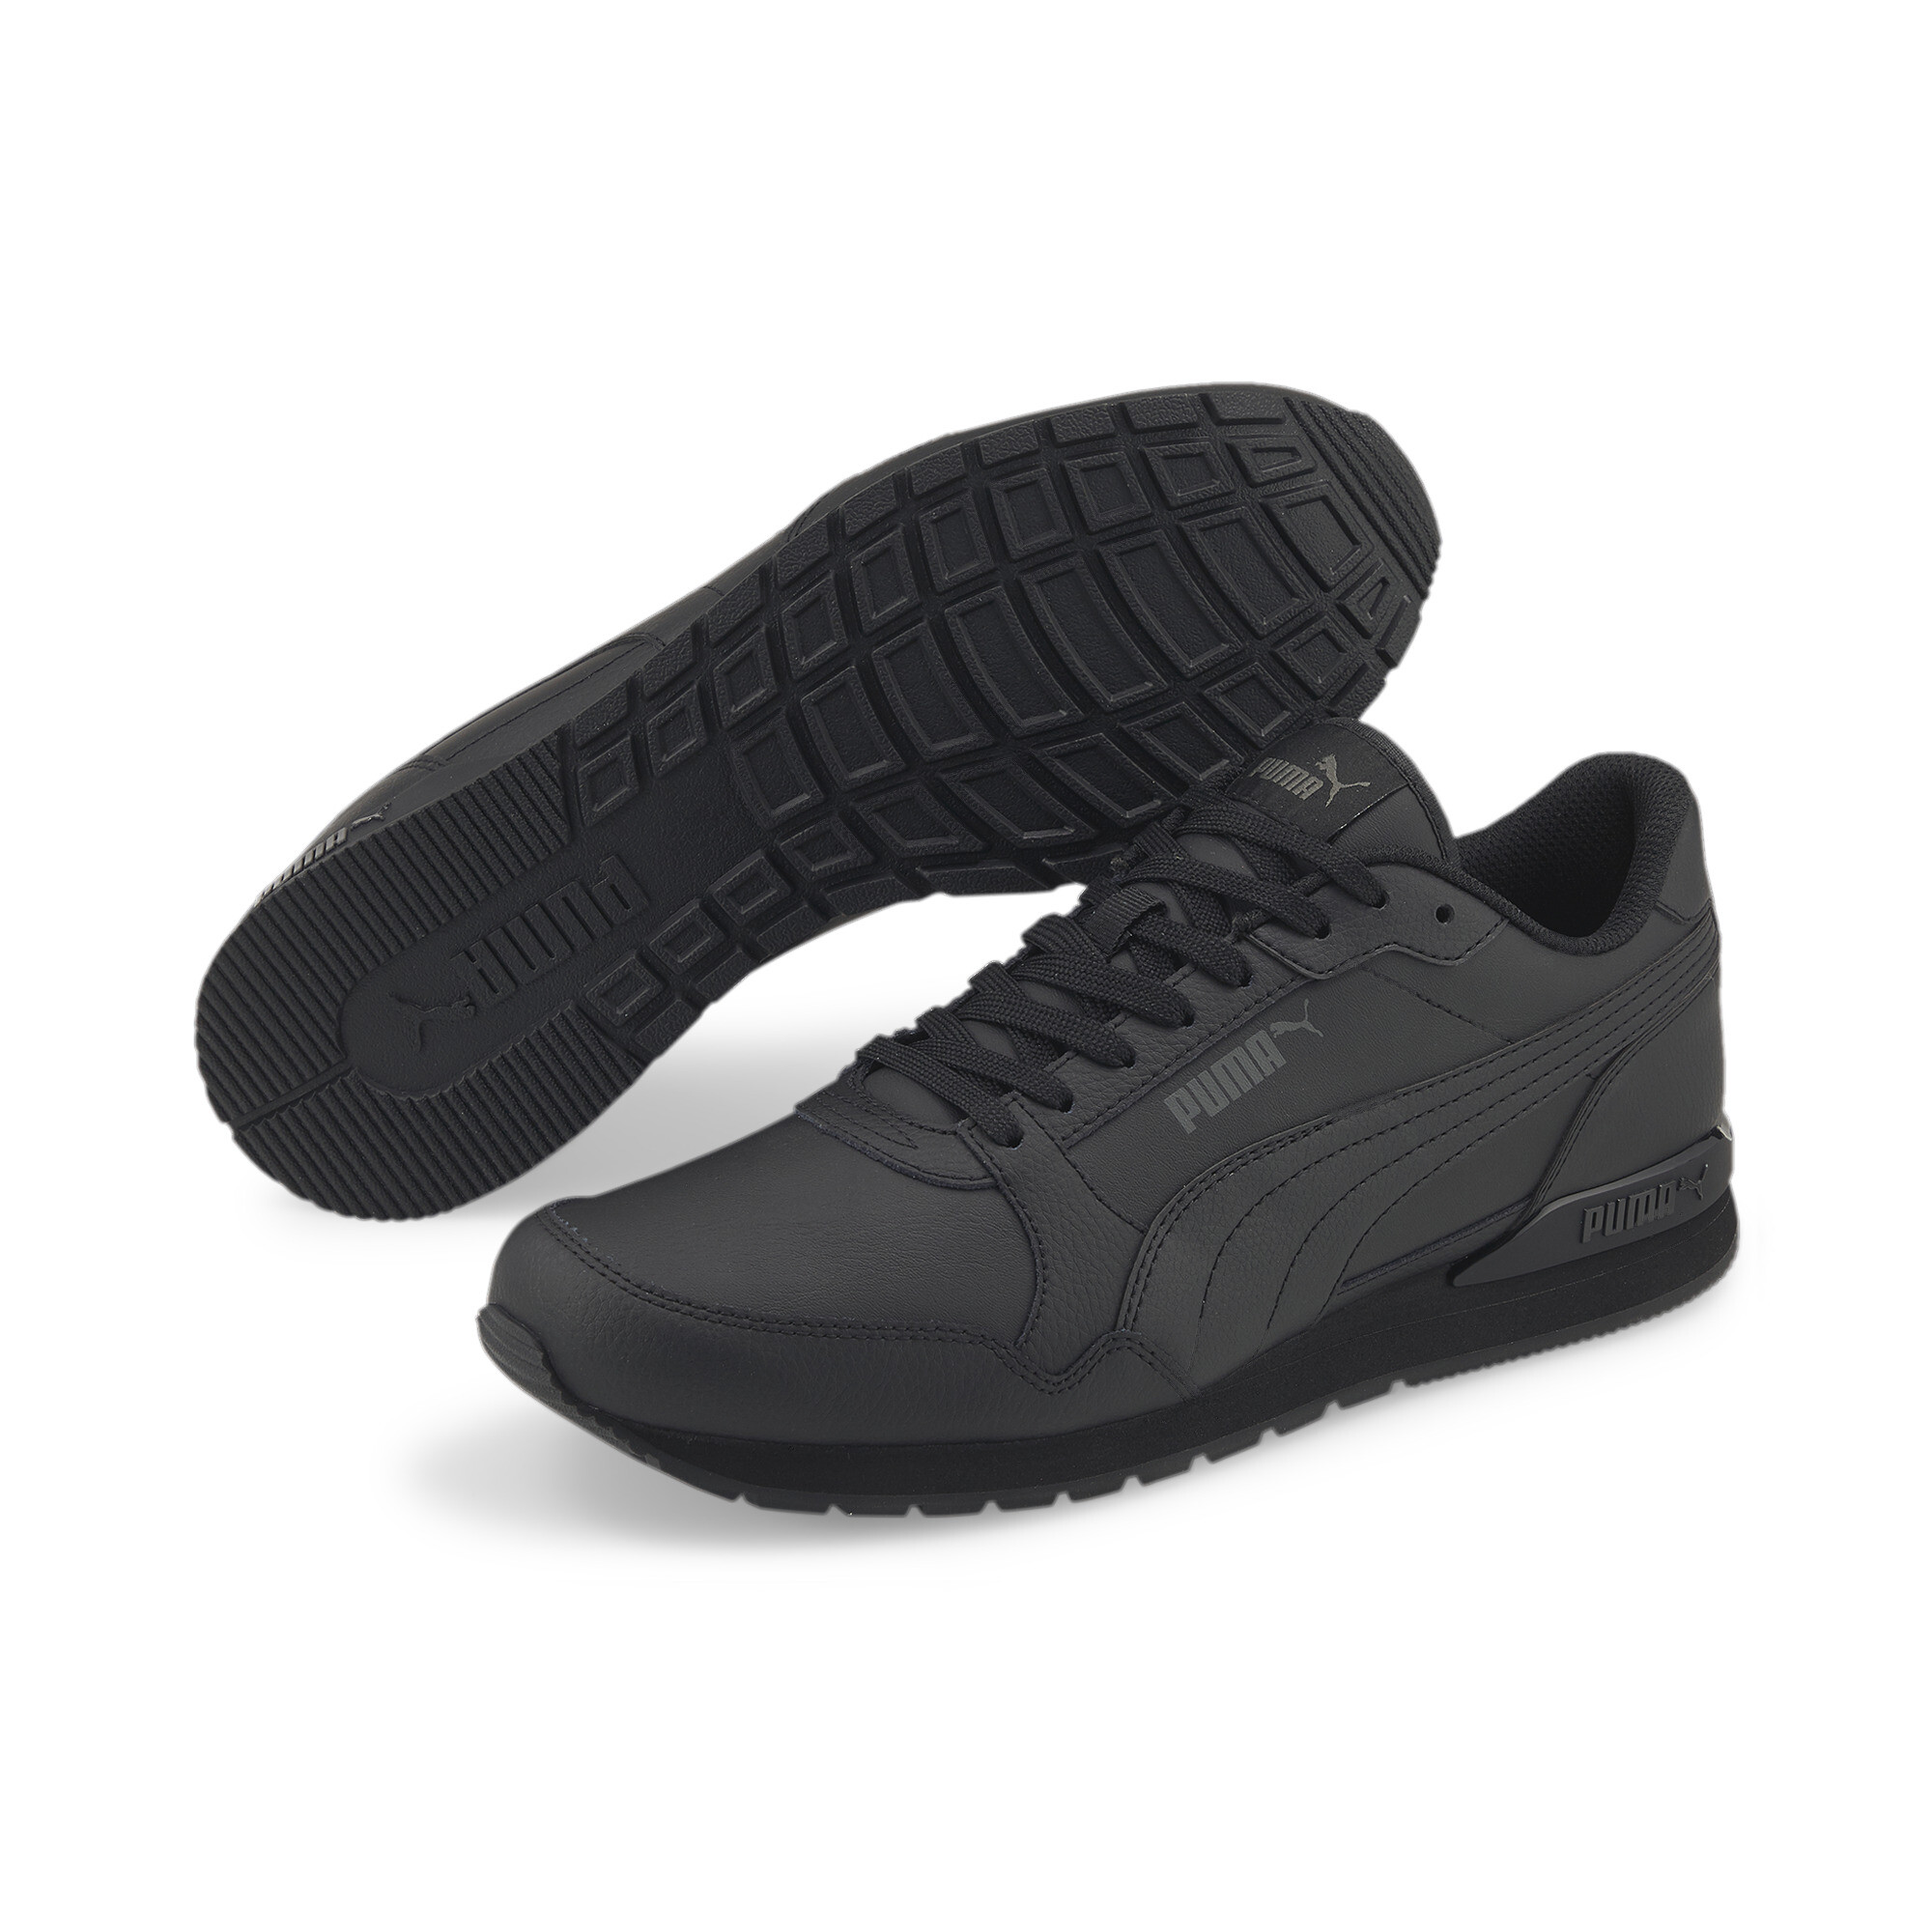 Puma ST Runner V3 L Trainers, Black, Size 45, Shoes